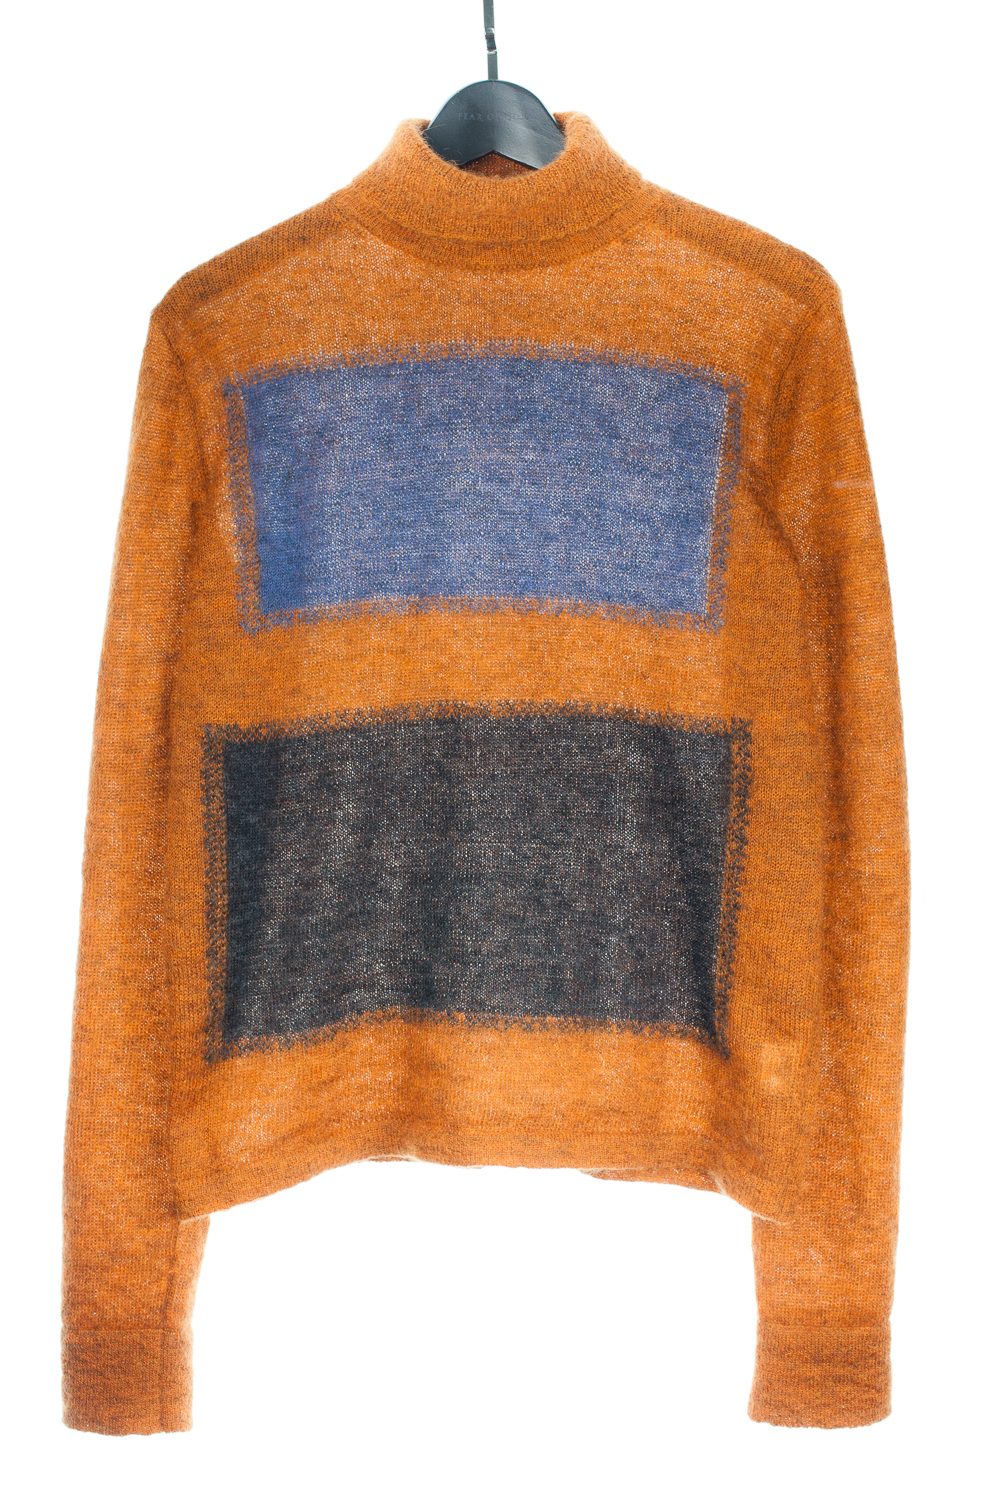 FW08 Rothko Block Sweater